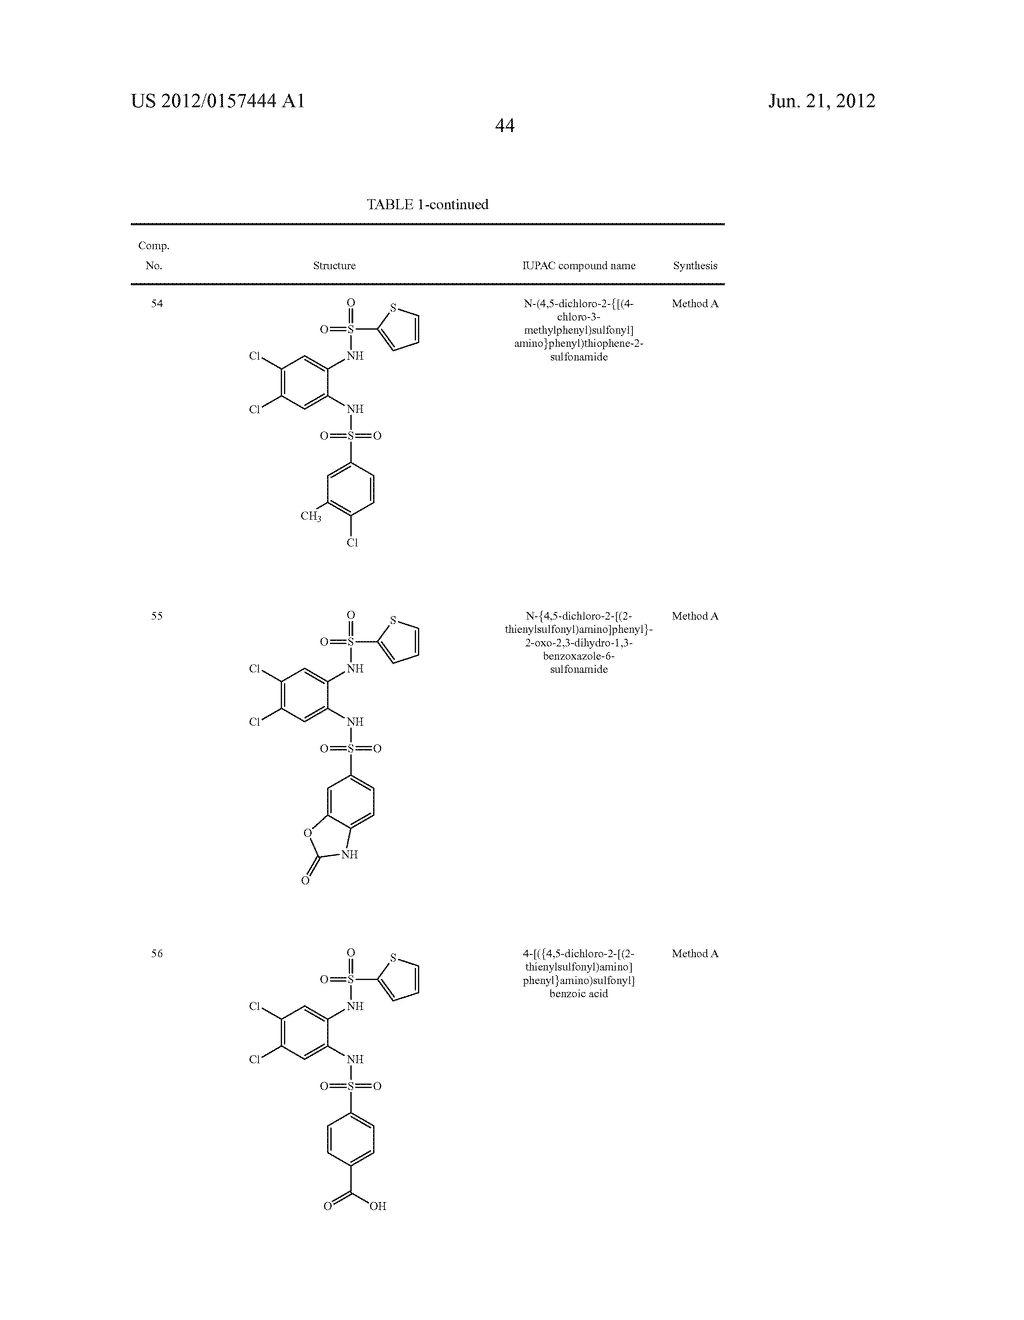 NOVEL 1,2- BIS-SULFONAMIDE DERIVATIVES AS CHEMOKINE RECEPTOR MODULATORS - diagram, schematic, and image 45